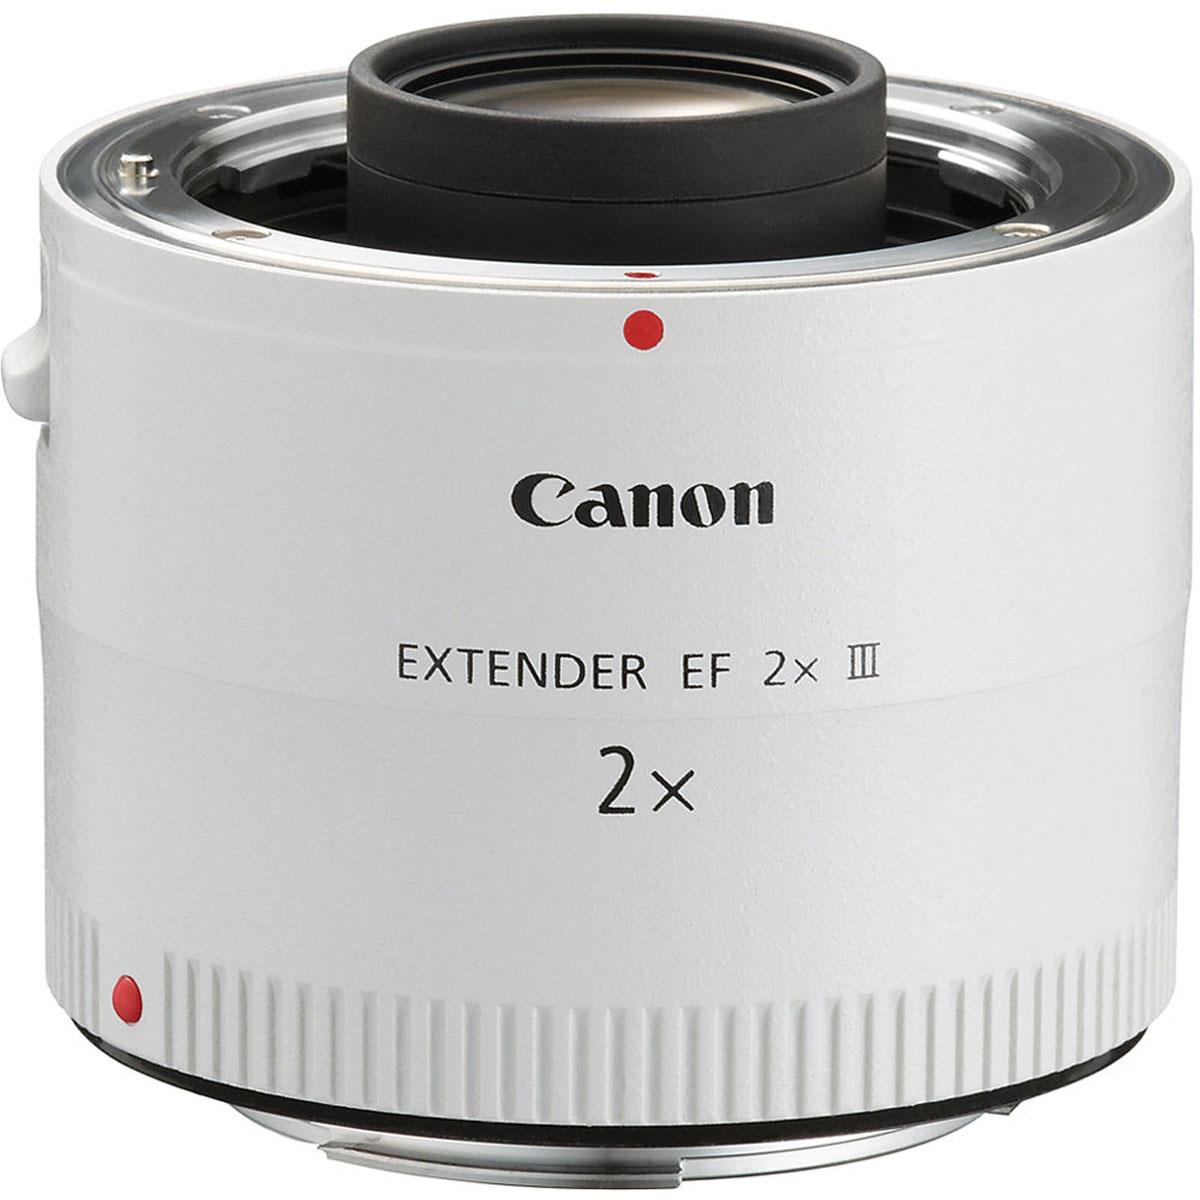 Image of Canon Extender EF 2x III Tele Extender